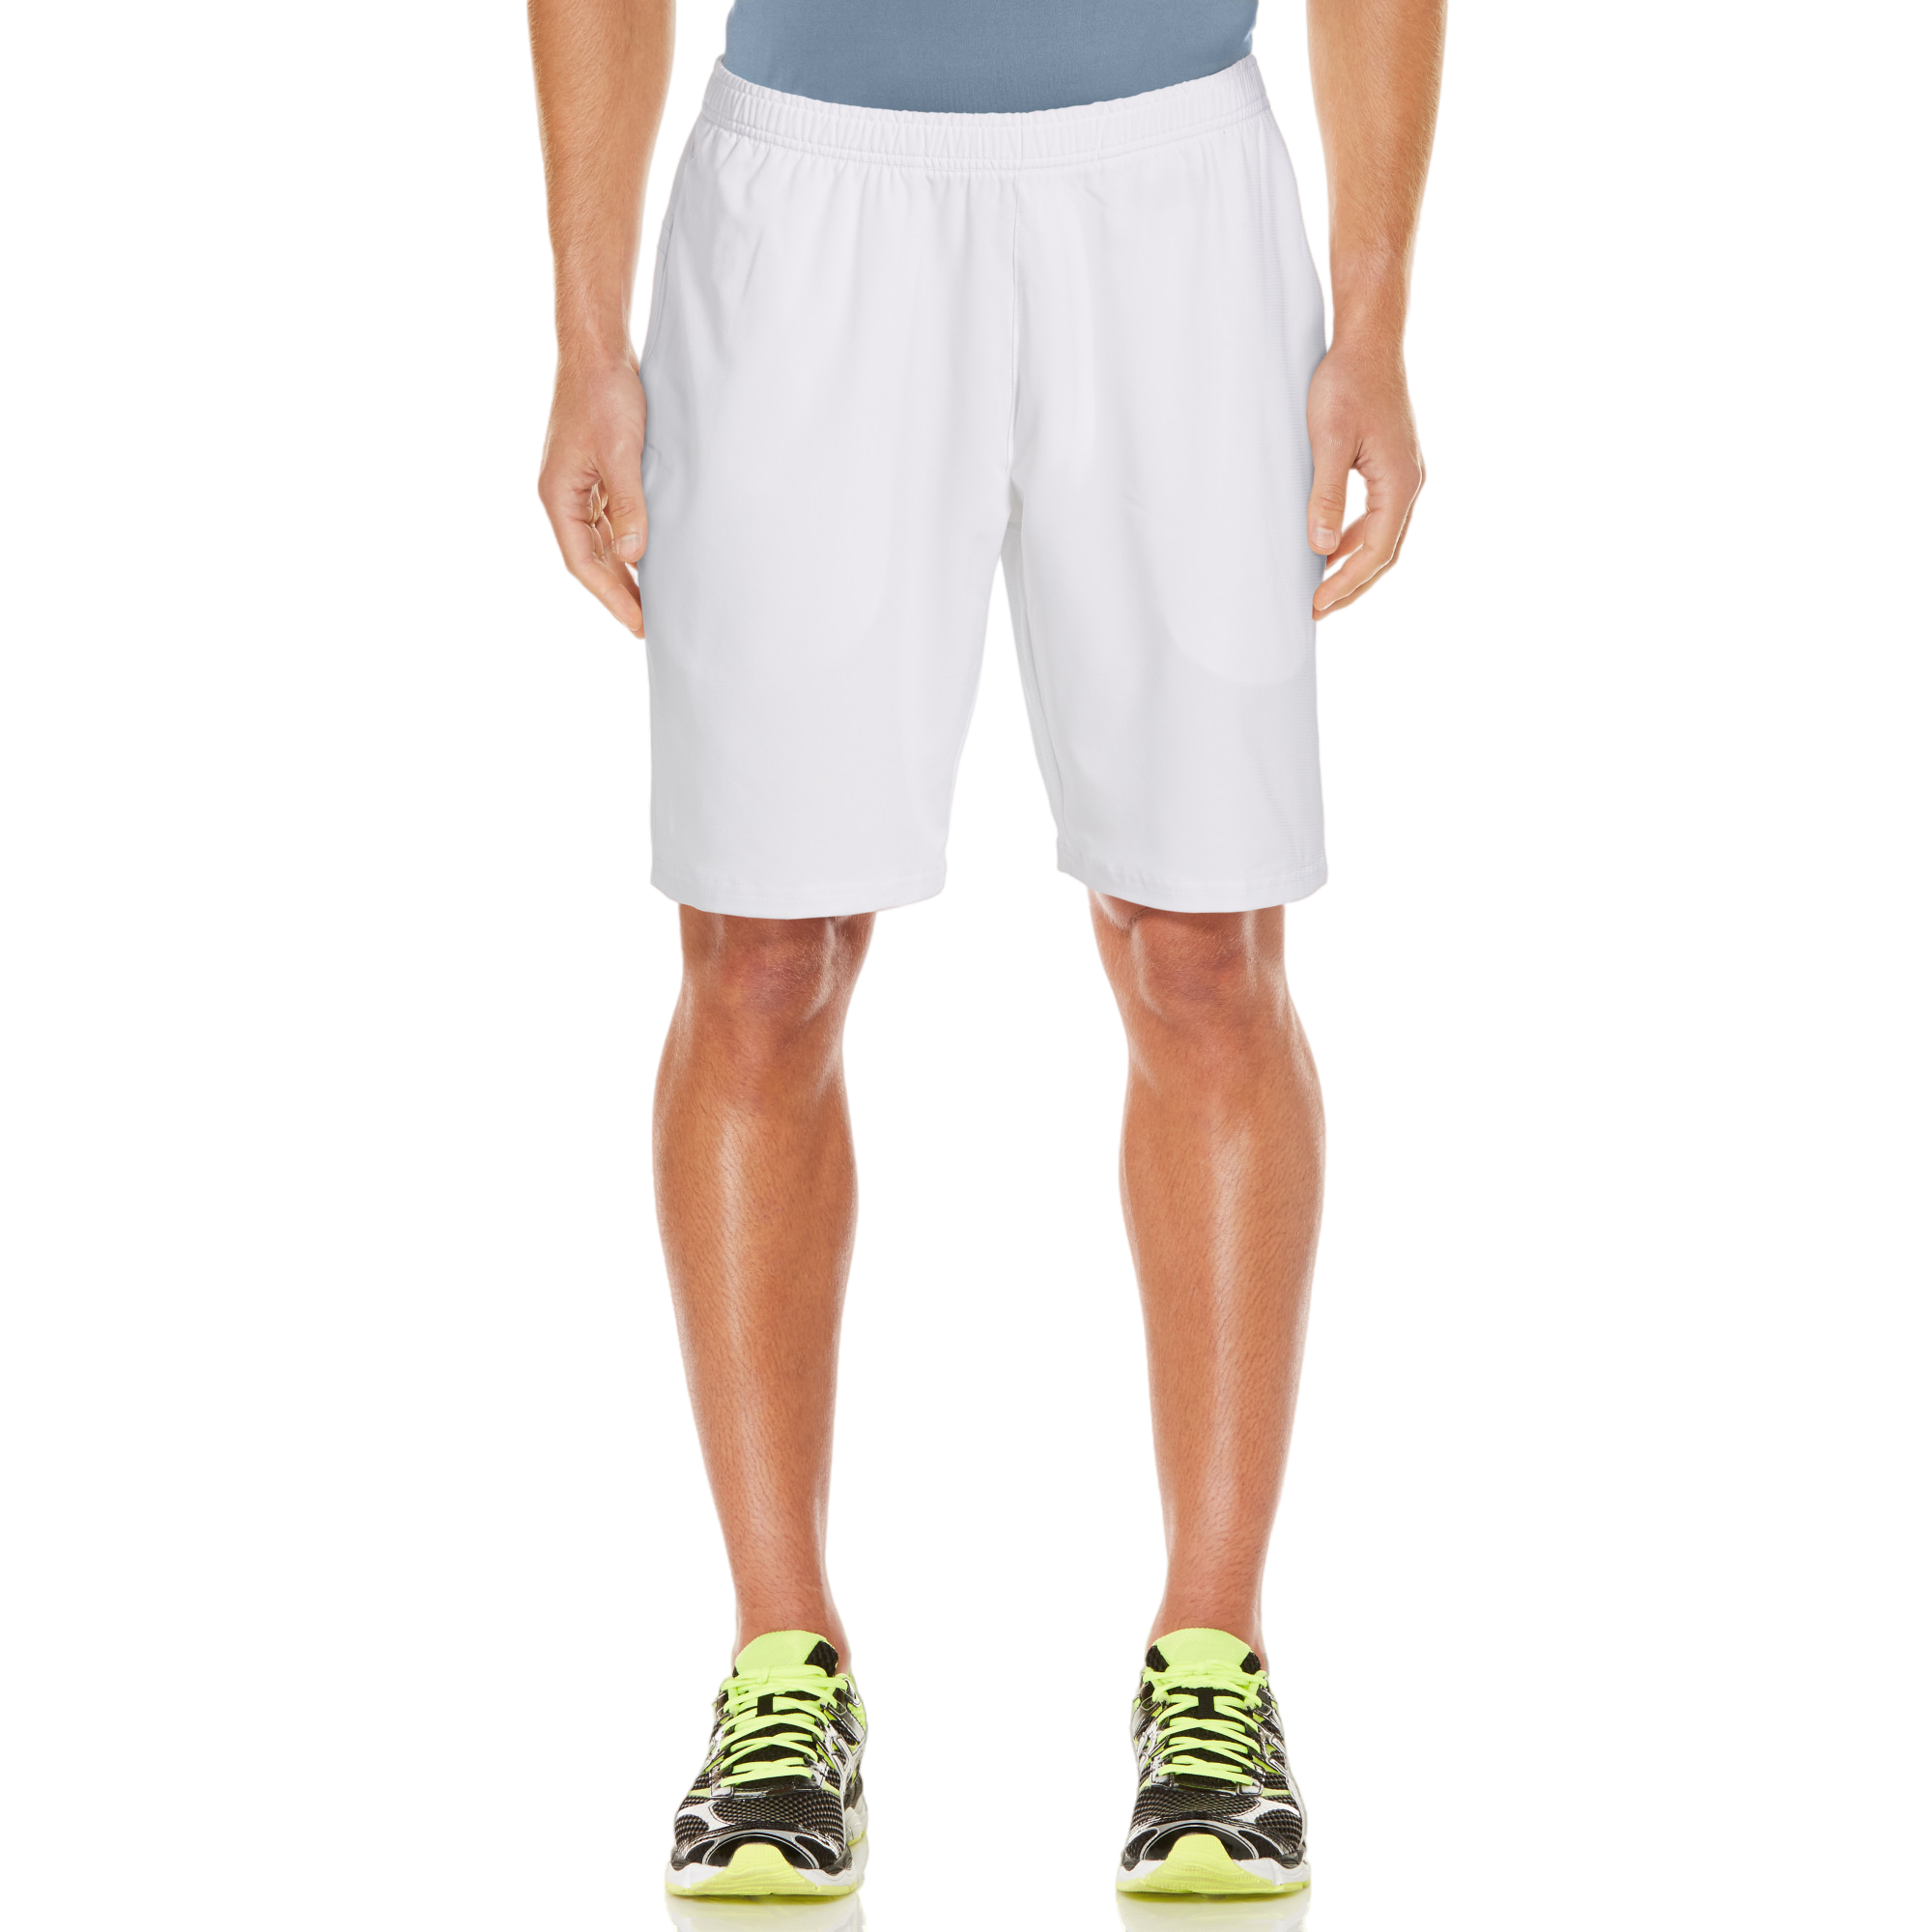 Men's Athletic Tennis Short